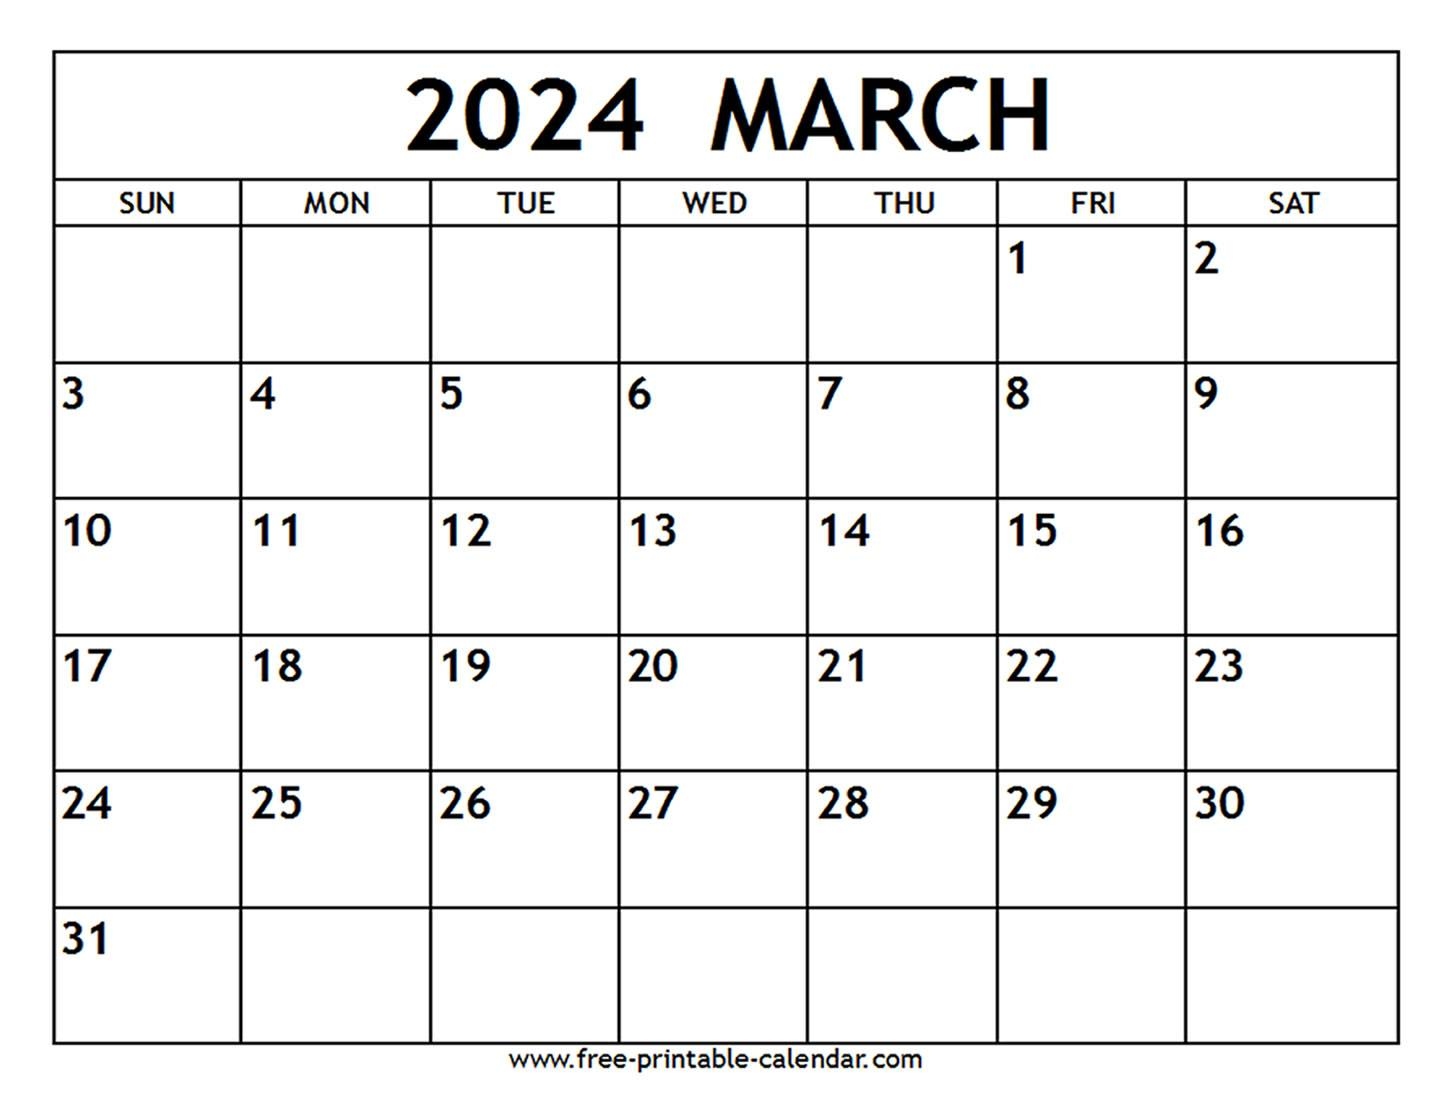 March 2024 Calendar - Free-Printable-Calendar intended for Free Printable Blank Calendar March 2024